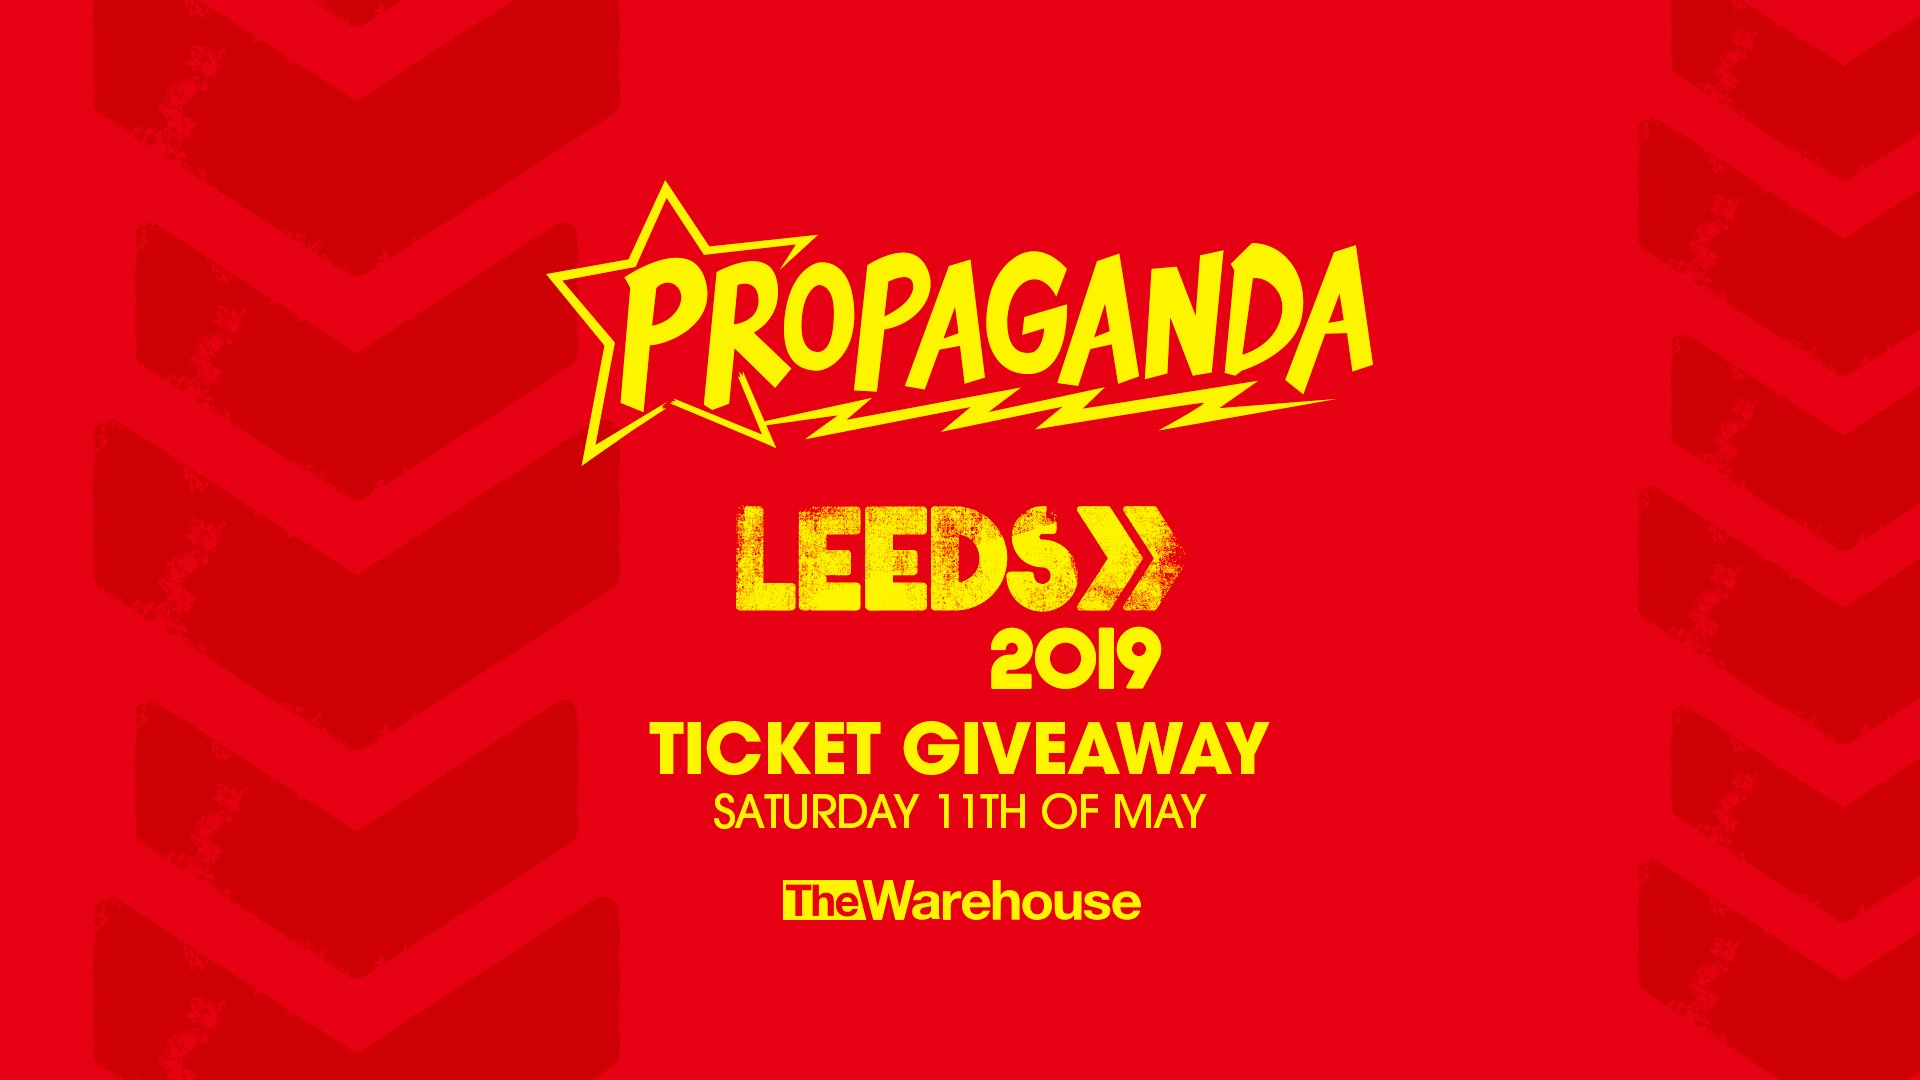 Propaganda Leeds – Leeds Festival Ticket Giveaway!